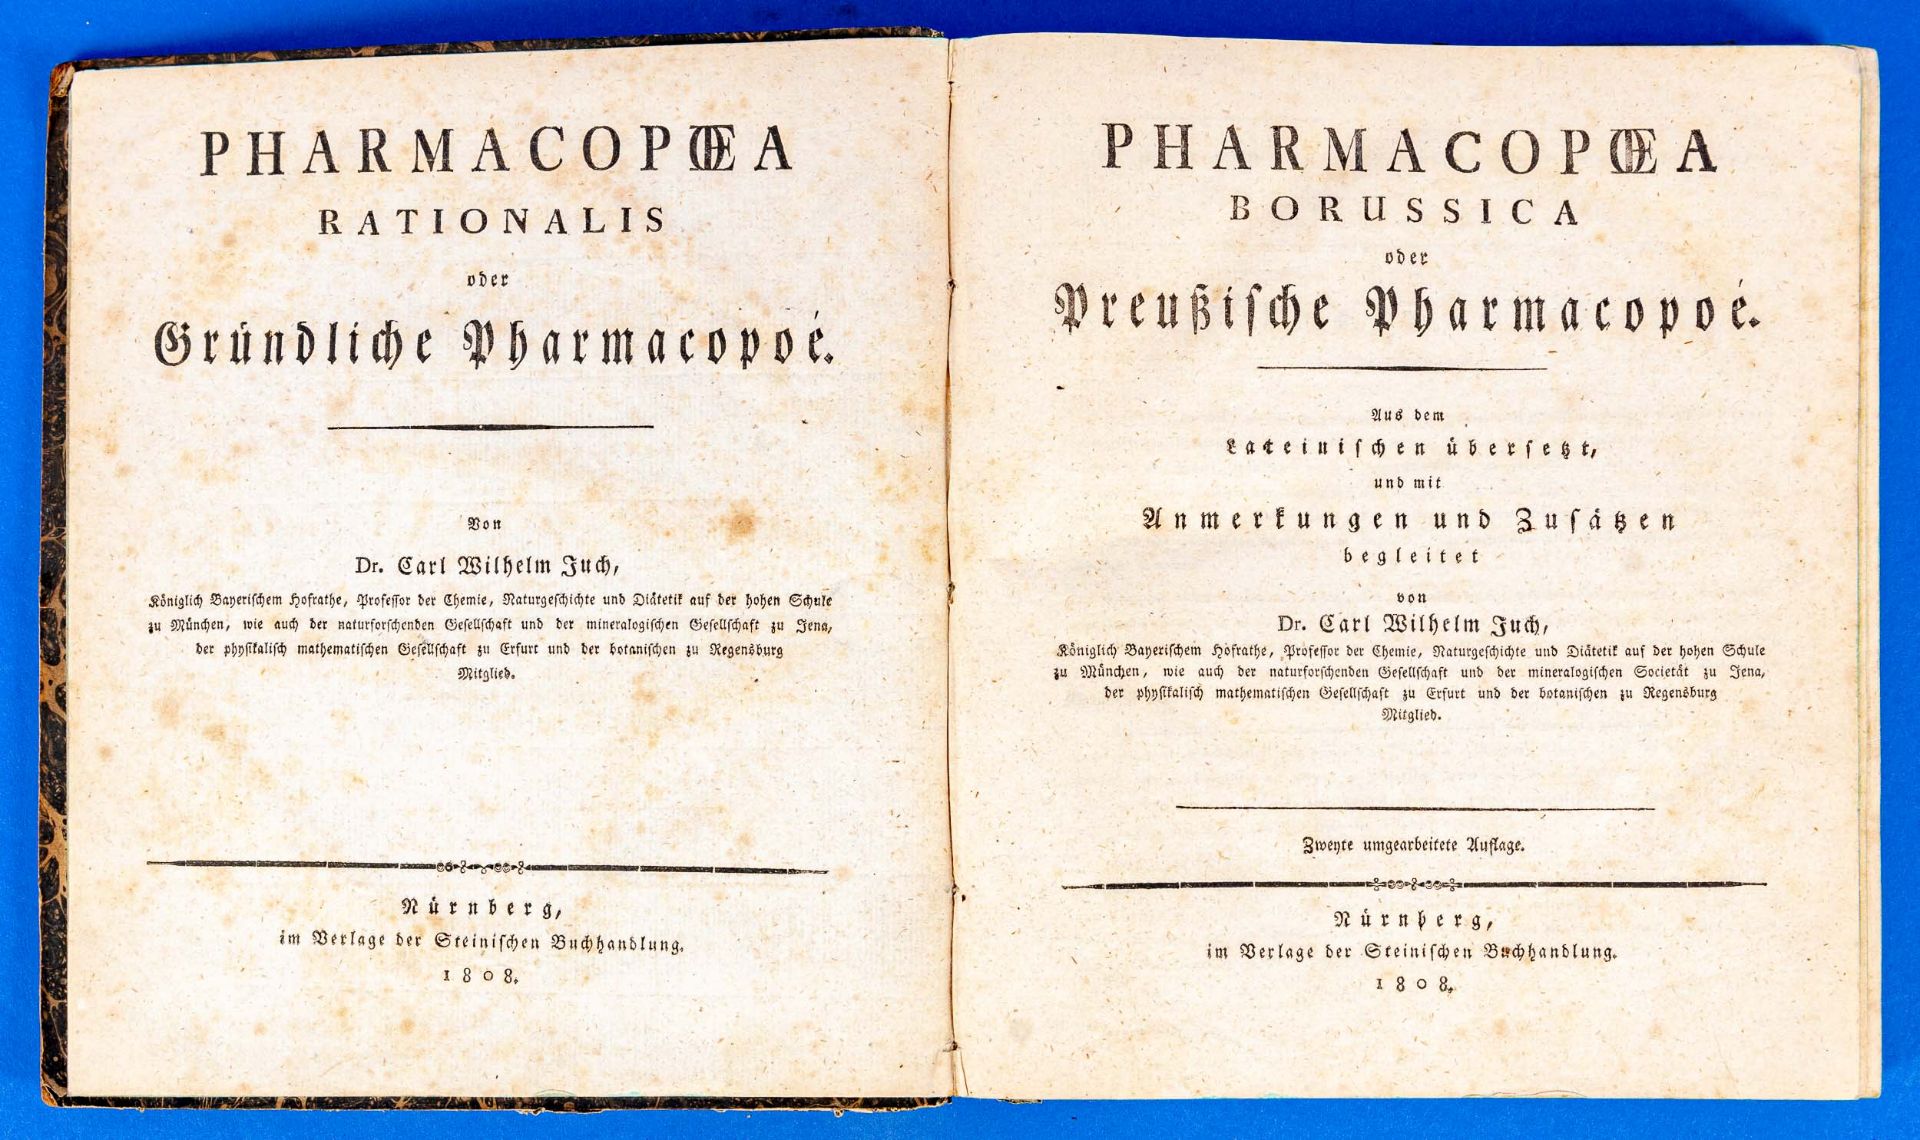 "PHARMACOPOEA BORUSSICA oder Preußische Pharmacopoe... von Dr. Carl Wilhelm Juch, Nürnberg 1808. Ma